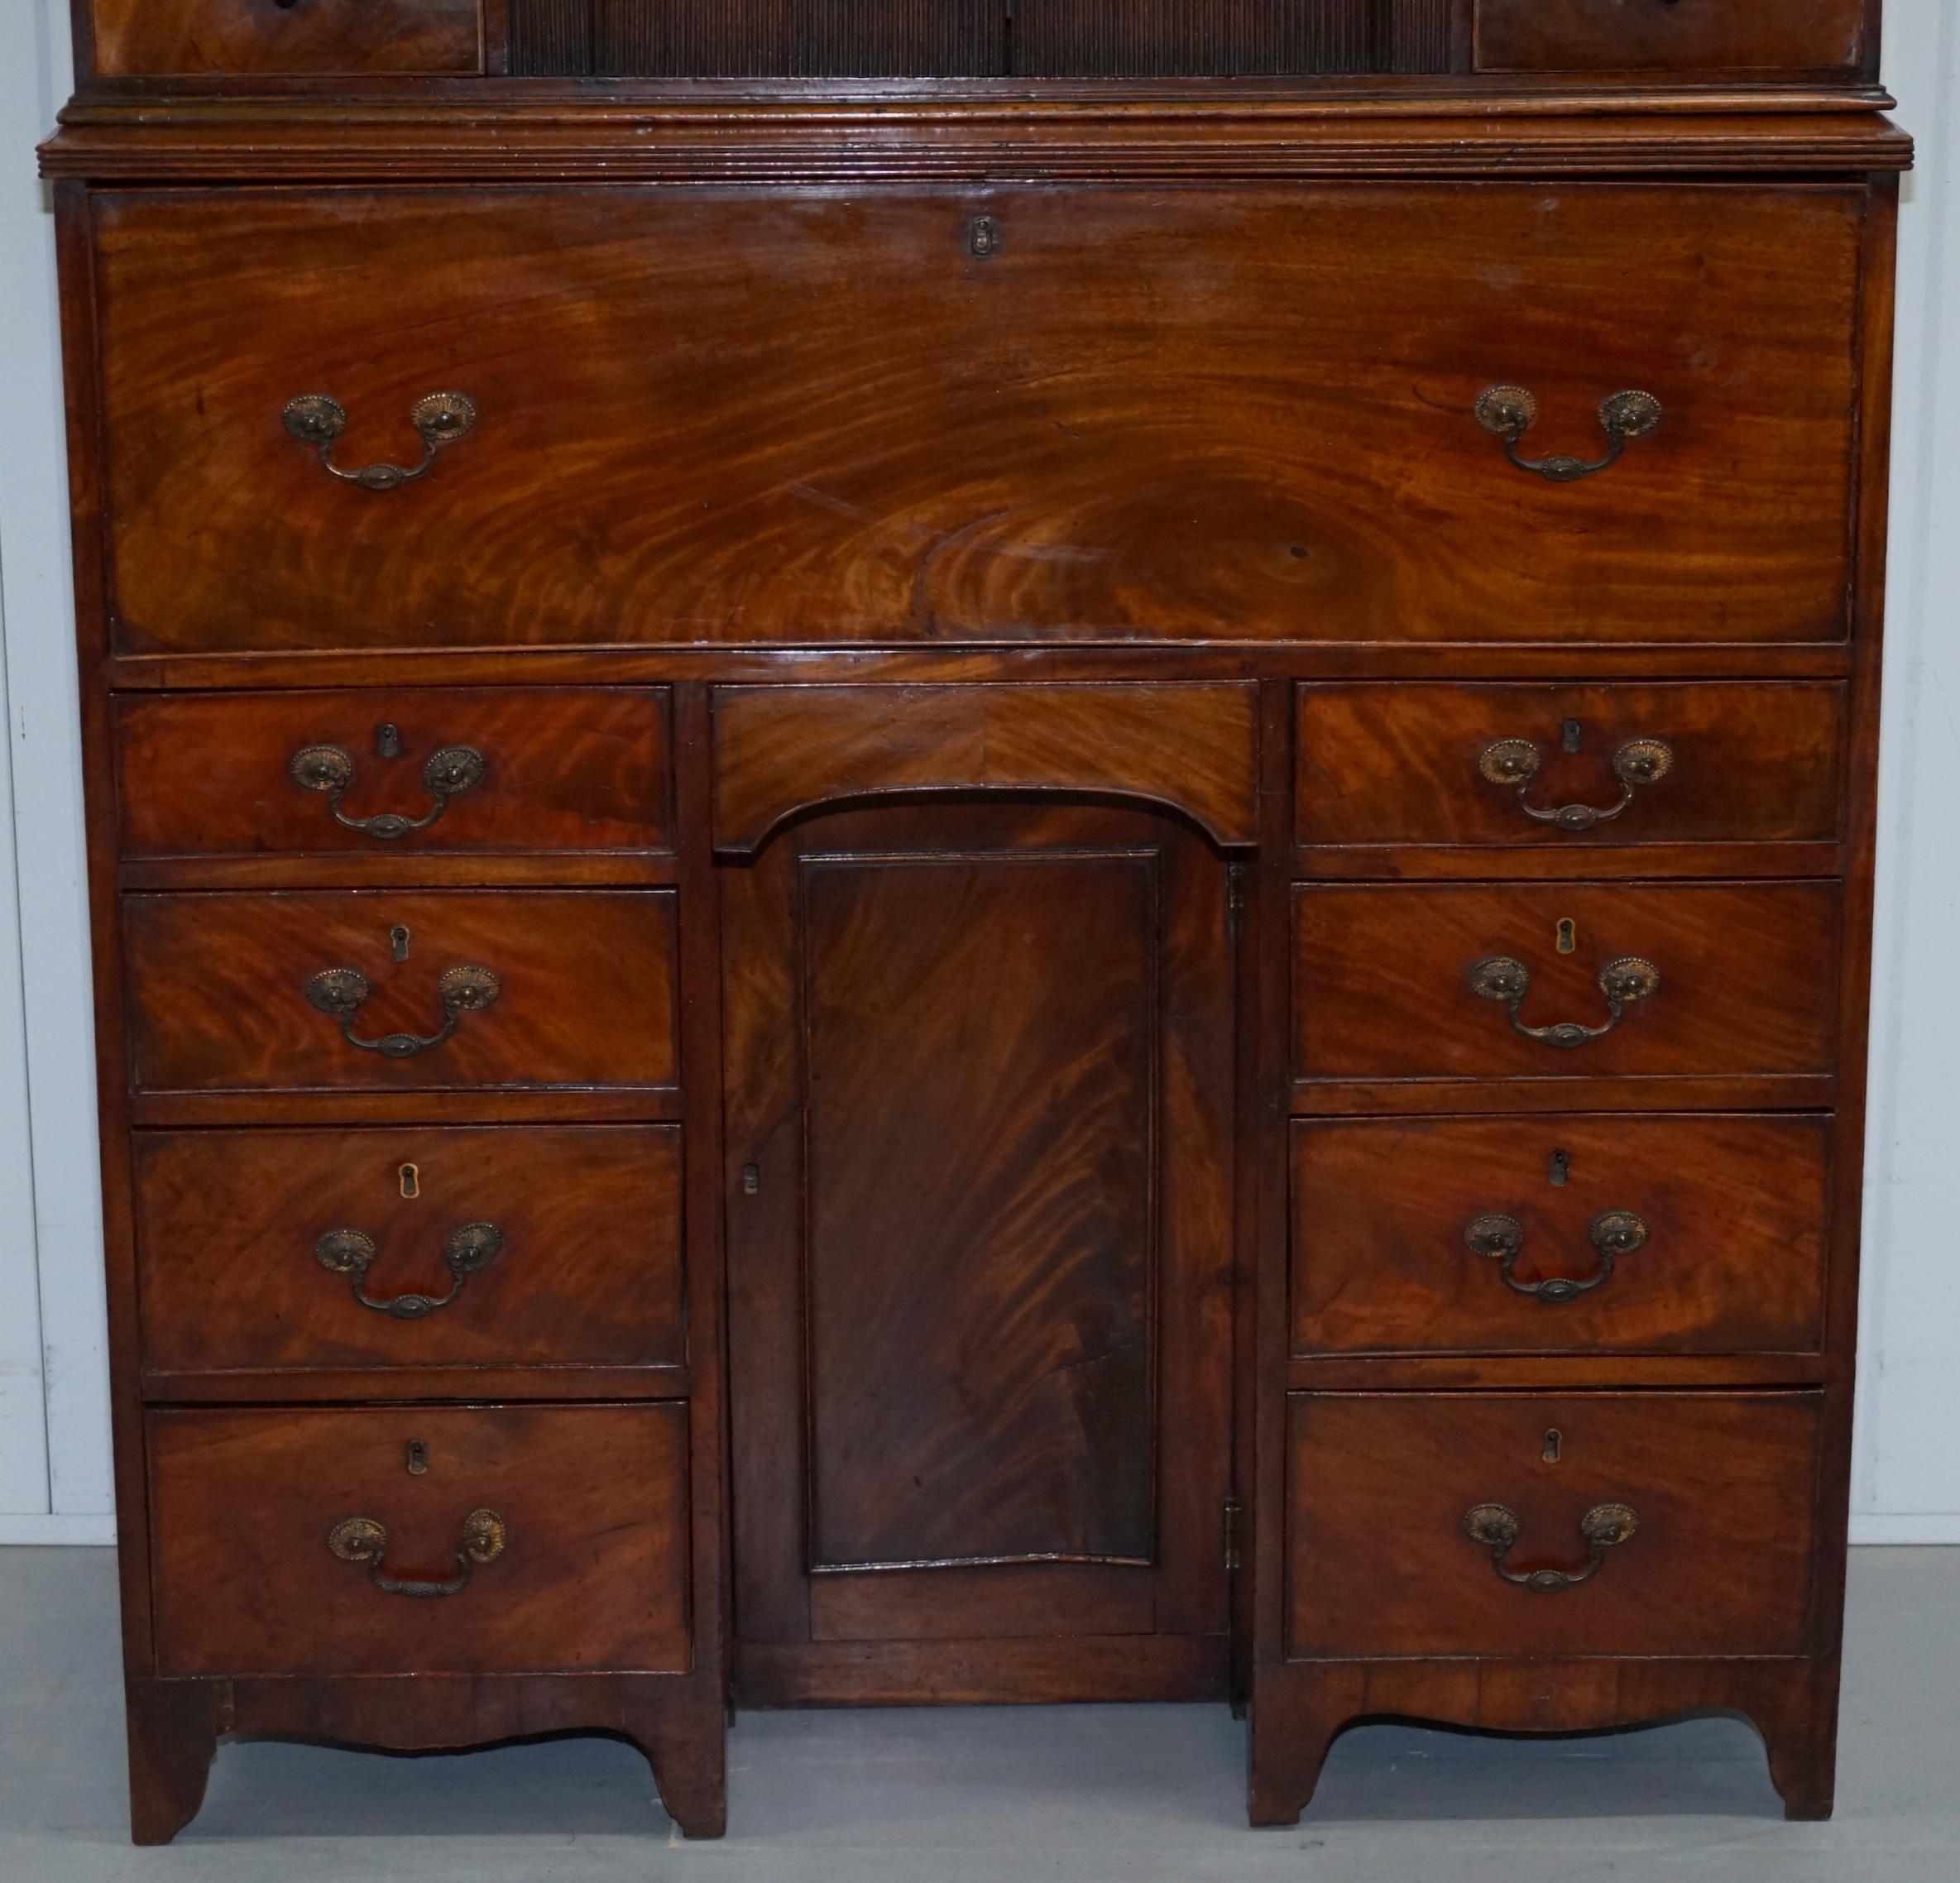 Rare 33 Drawer circa 1780 George III Mahogany Secretaire Bookcase Desk Bureau (Mahagoni)